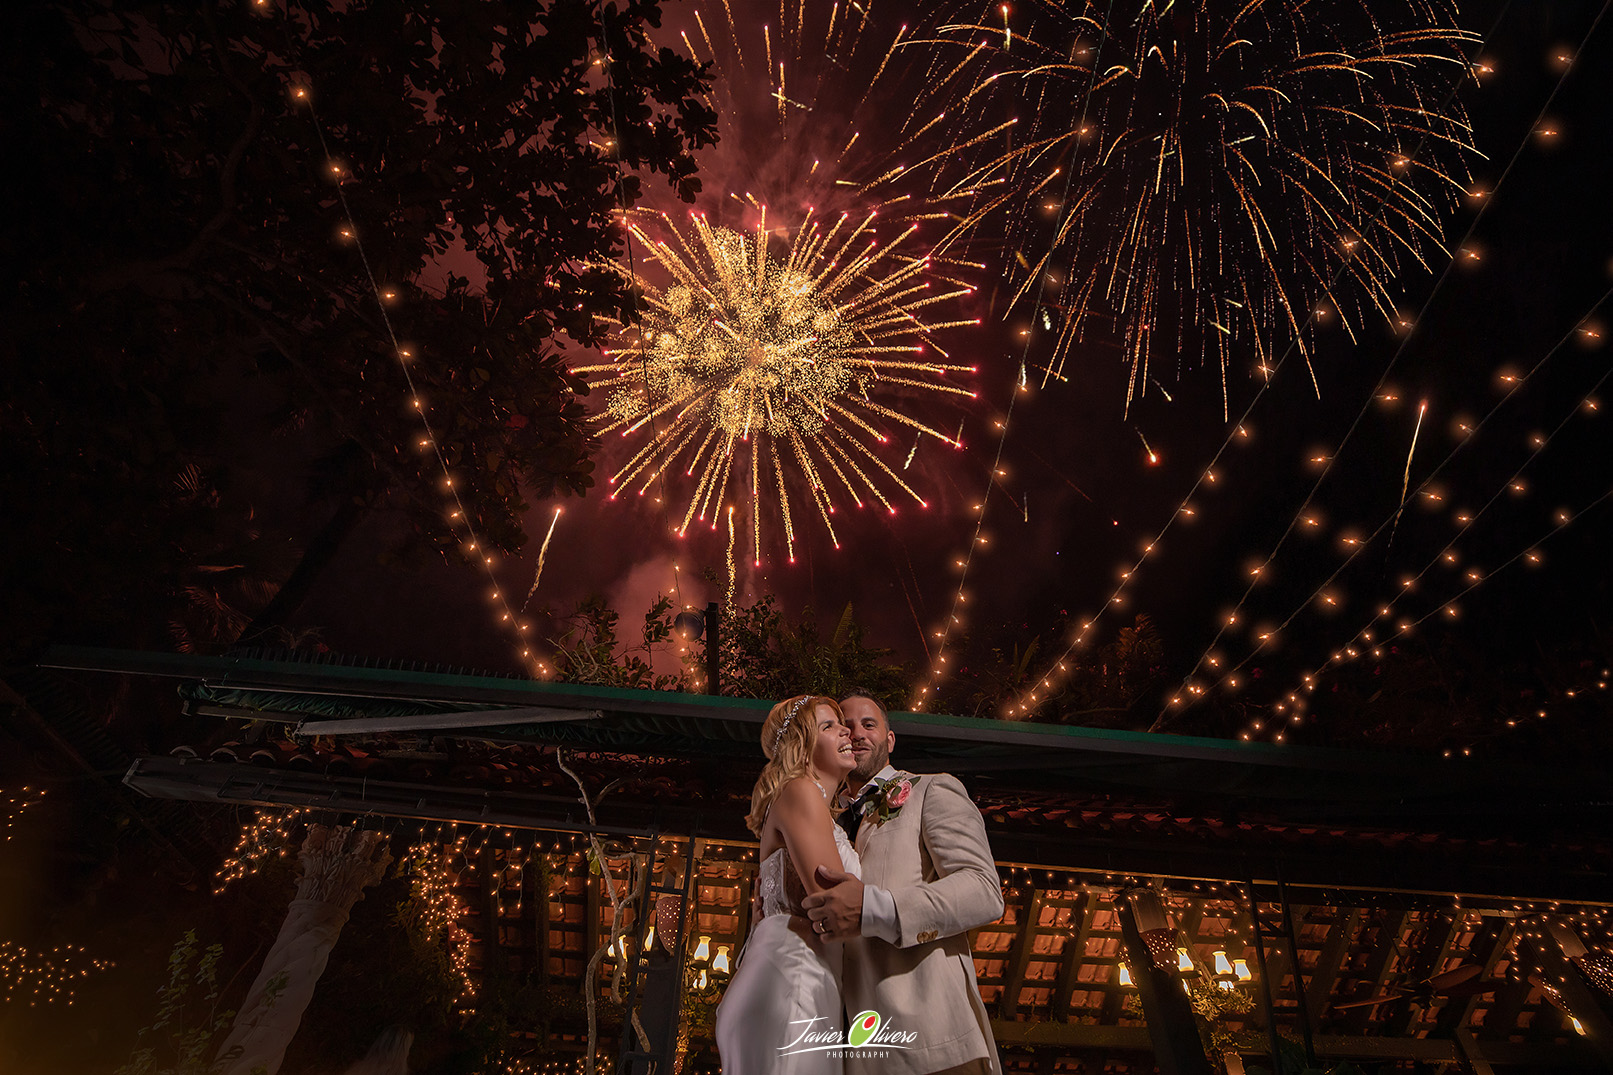 Wedding at Hacienda Siesta Alegre Inn with fireworks